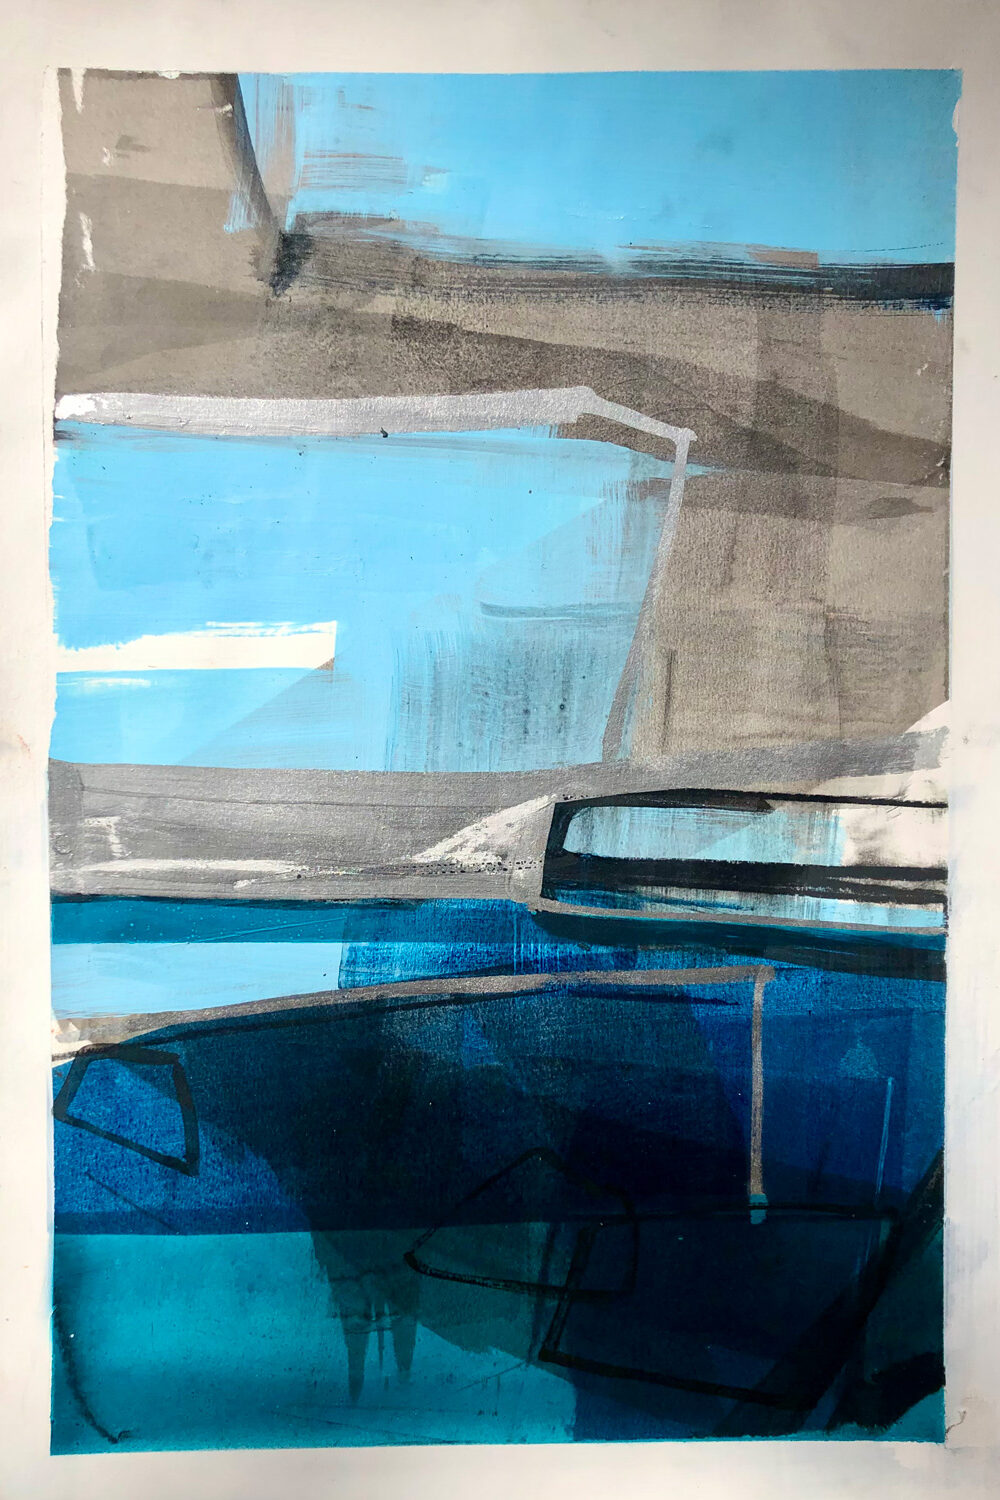 Anthony-Garratt-Blue-on-blue-study-40x29cm-mixed-media-on-paper